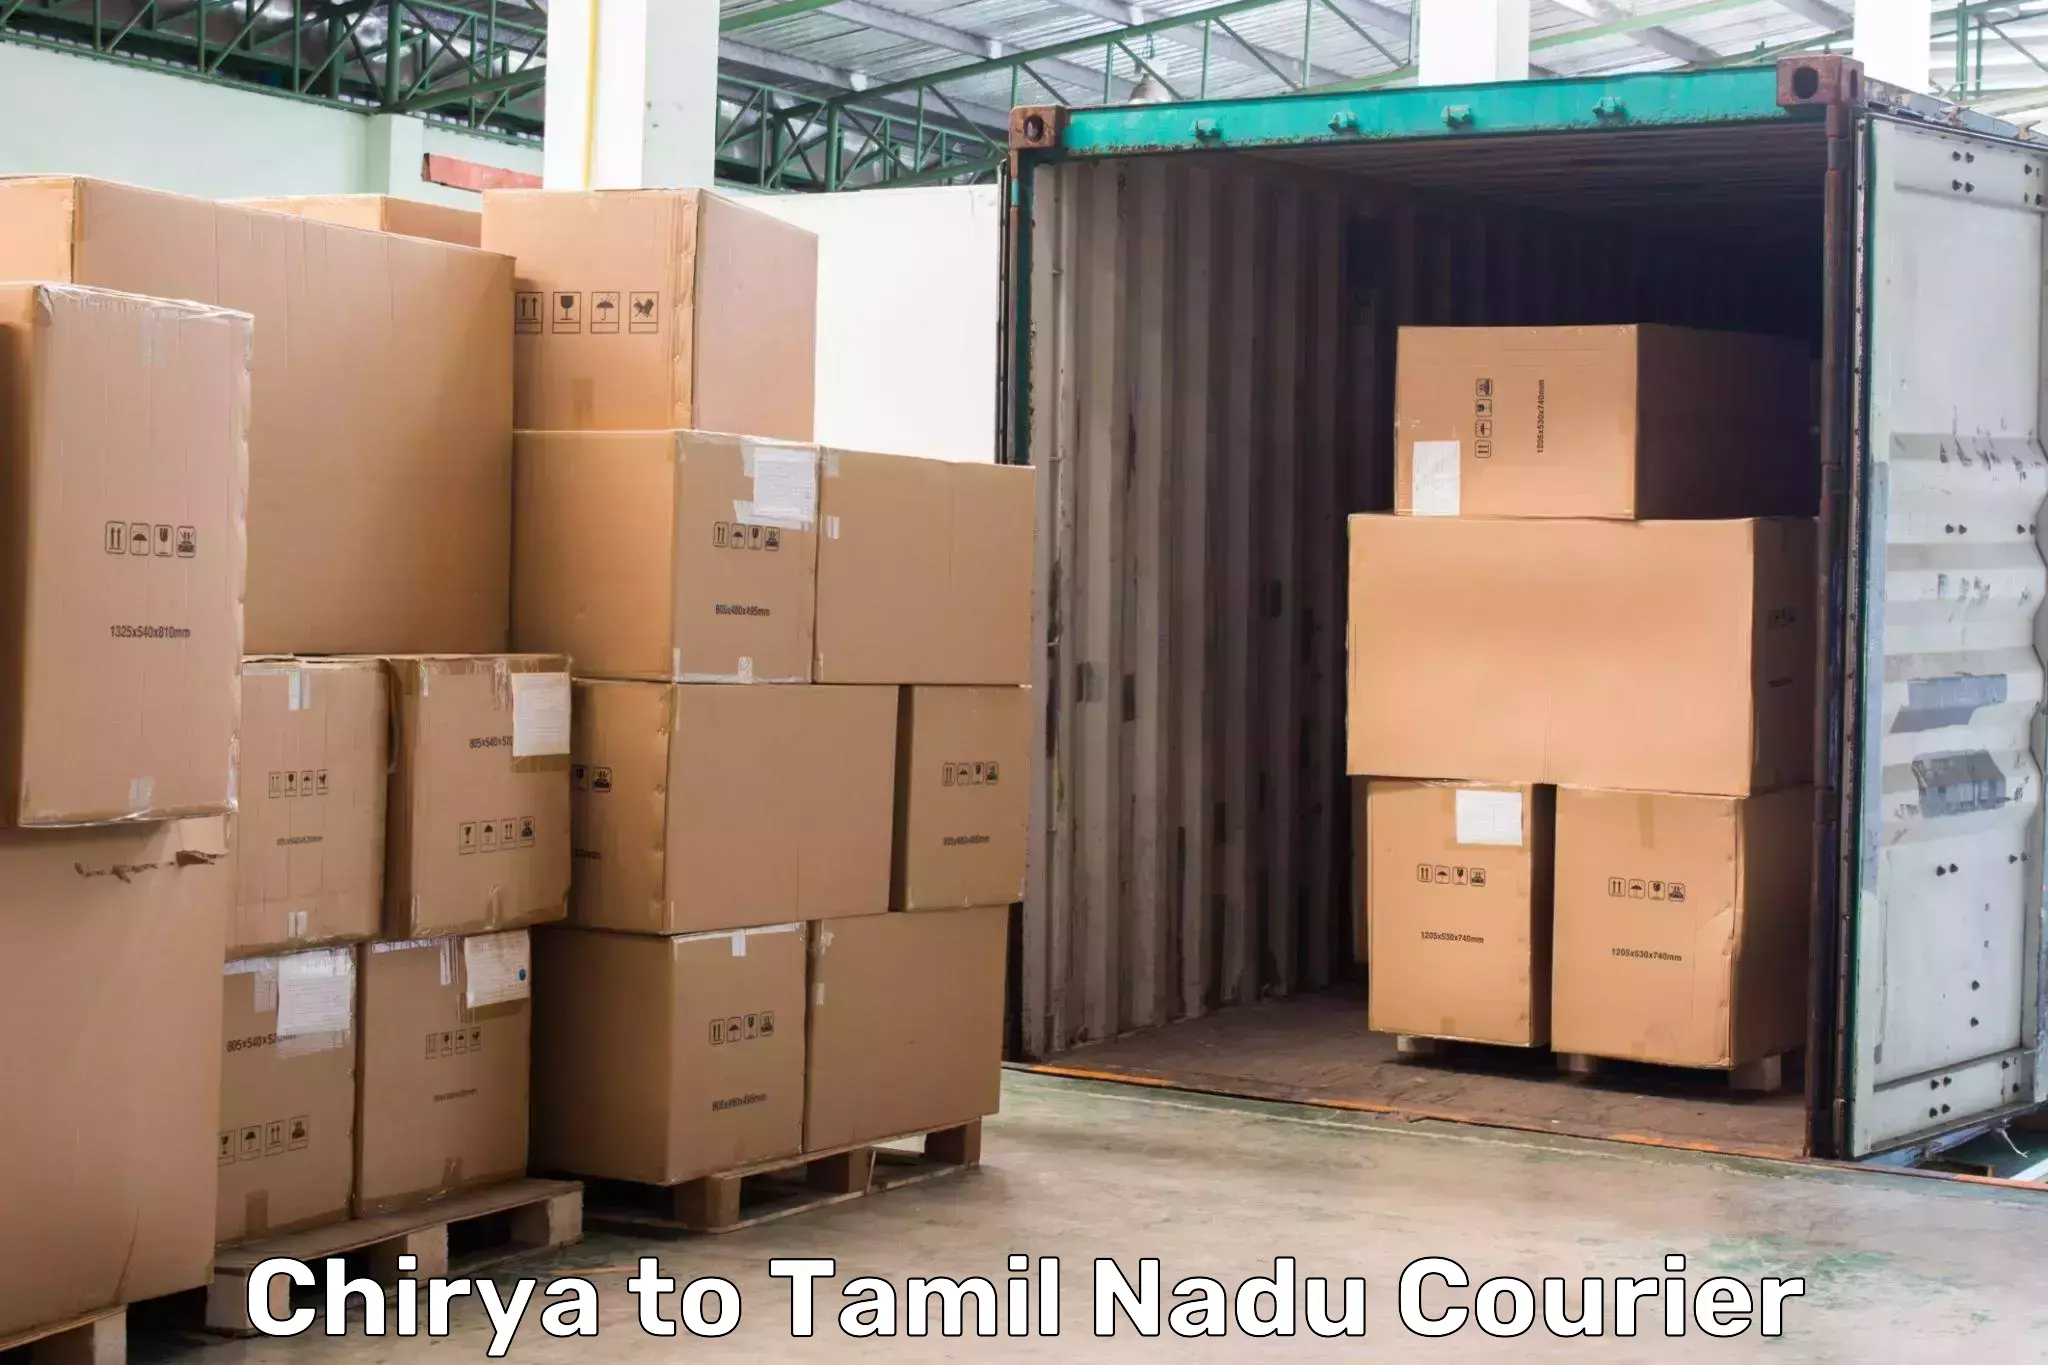 Enhanced tracking features Chirya to Tamil Nadu